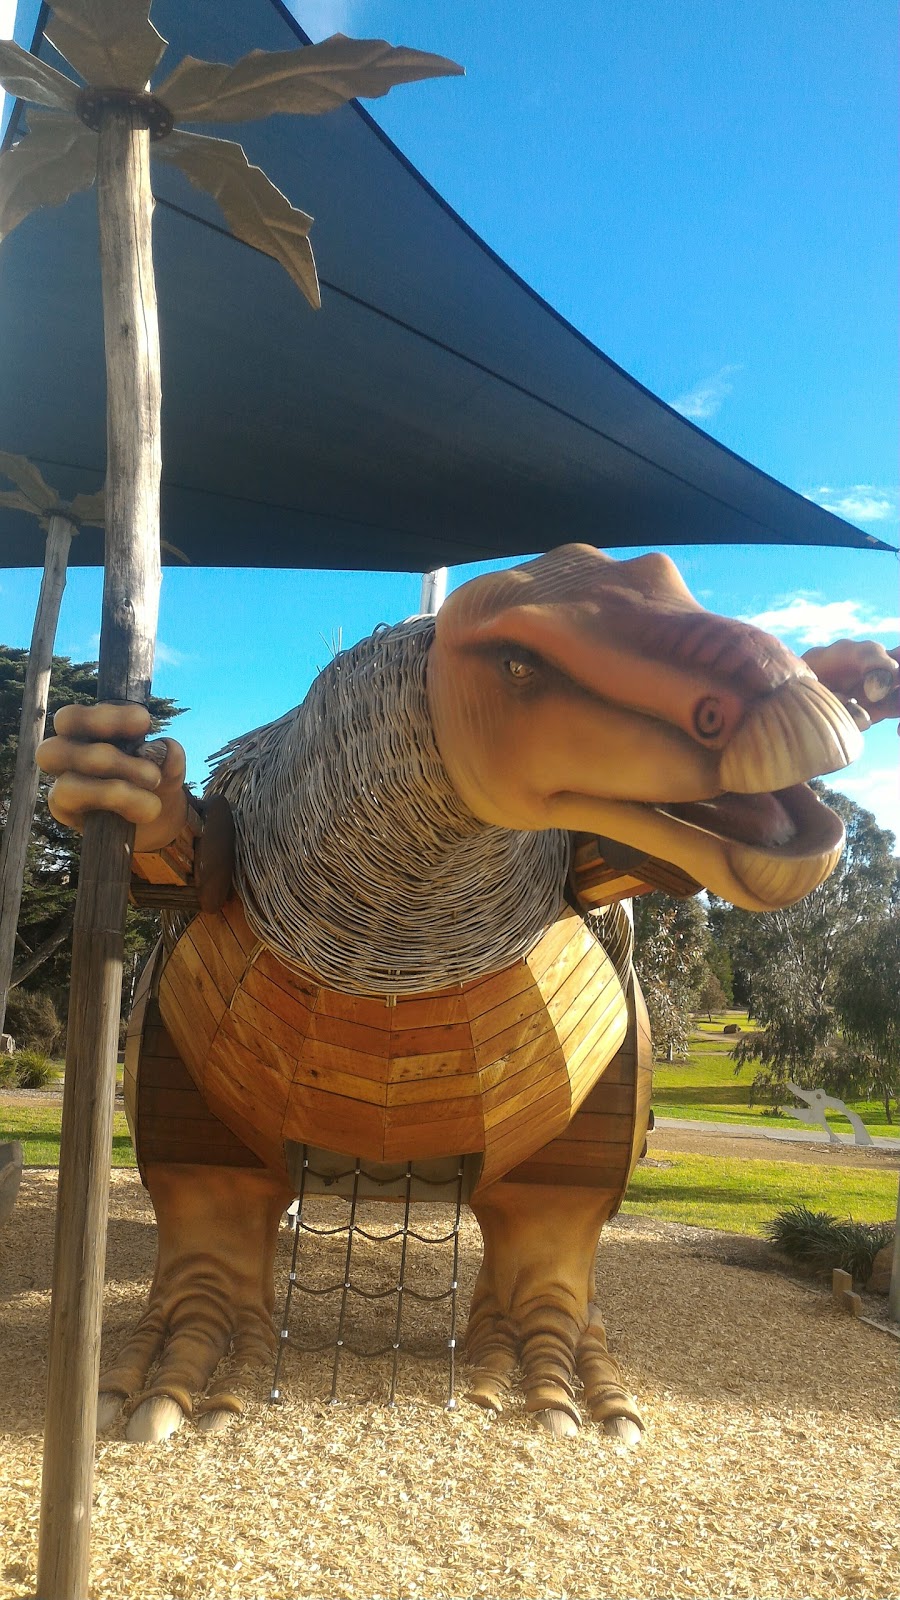 Mcnish Dinosaur Park Reserve | Court St, Yarraville VIC 3013, Australia